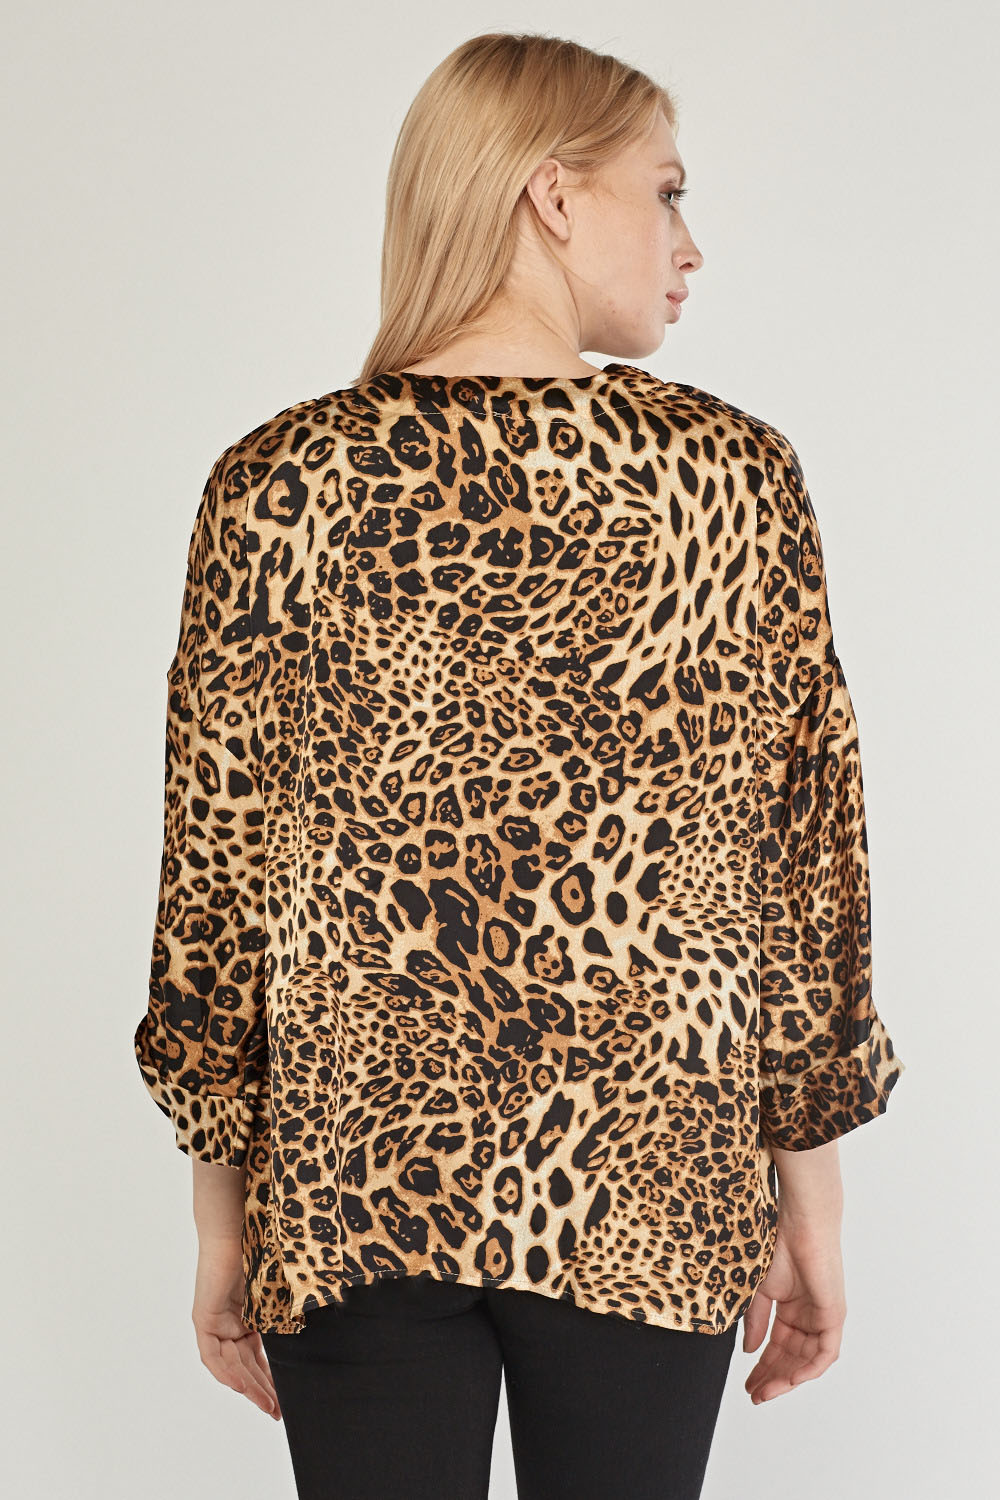 Leopard Print Kimono - Just $3